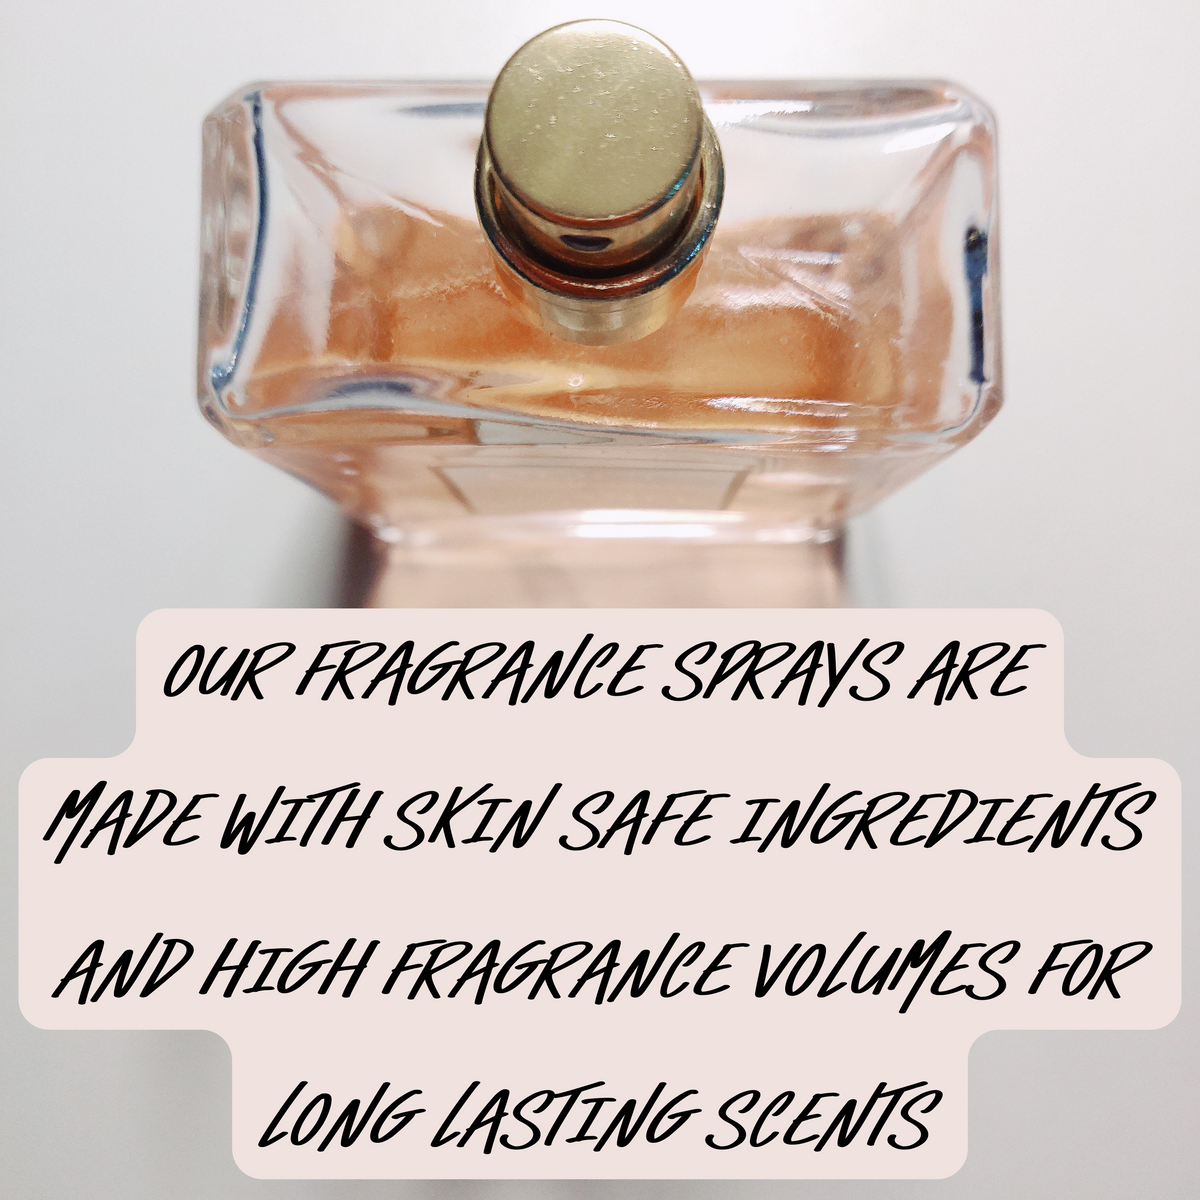 Sugar Cookie - Unisex Perfume - The Parfumerie - Exotic Oil – The  Parfumerie Store